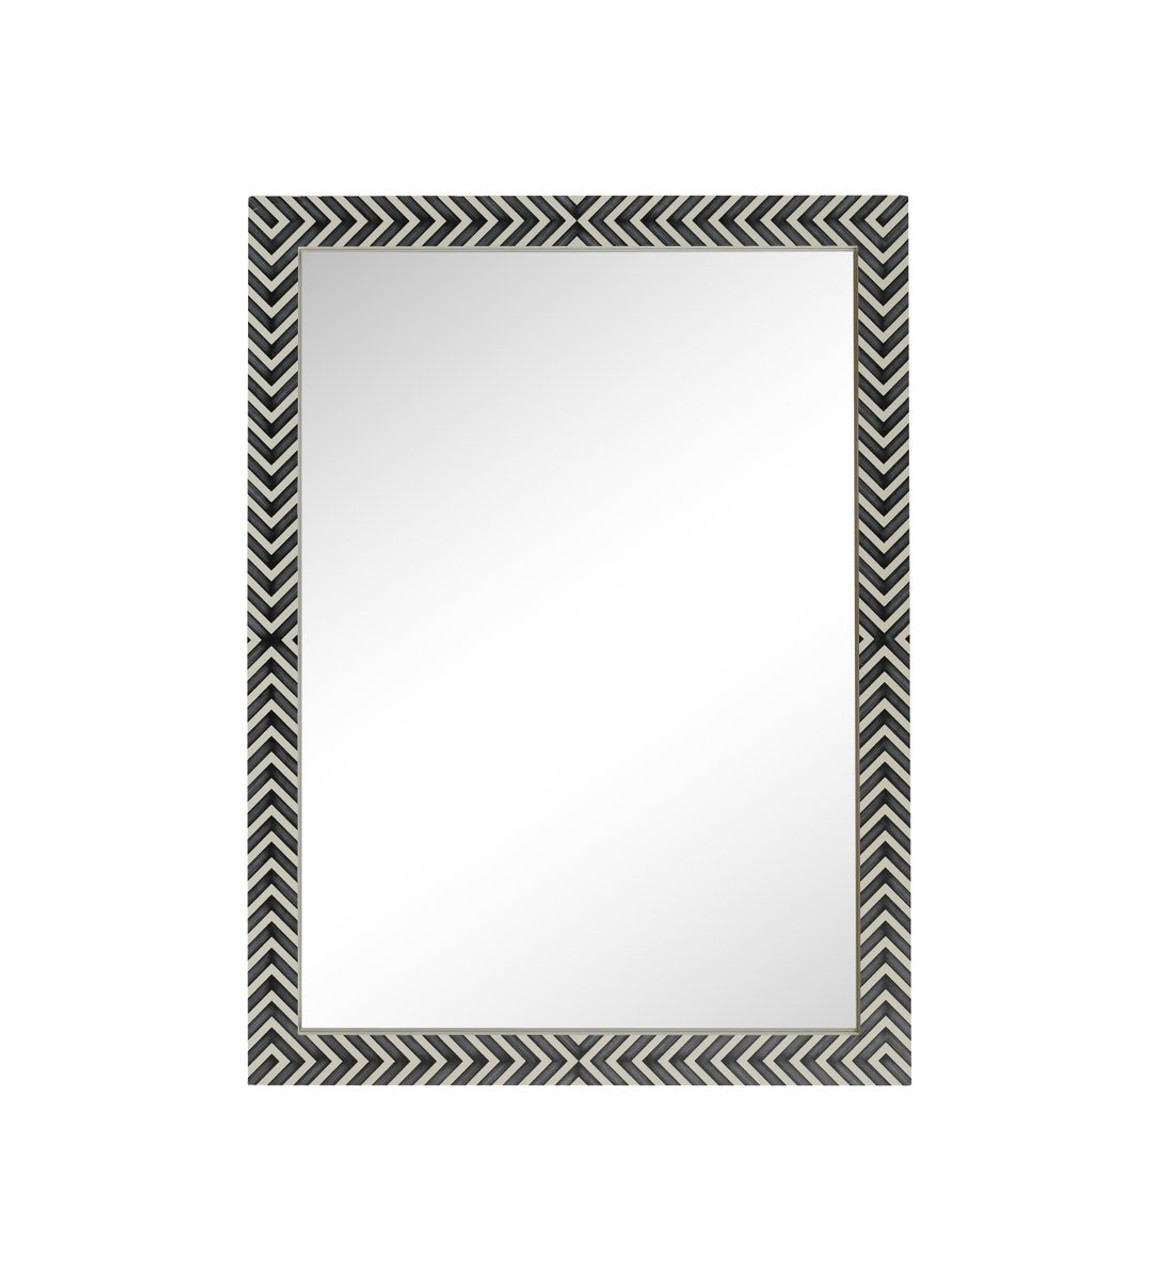 Elegant Decor MR53648 Rectangular mirror 48x36 inch in chevron